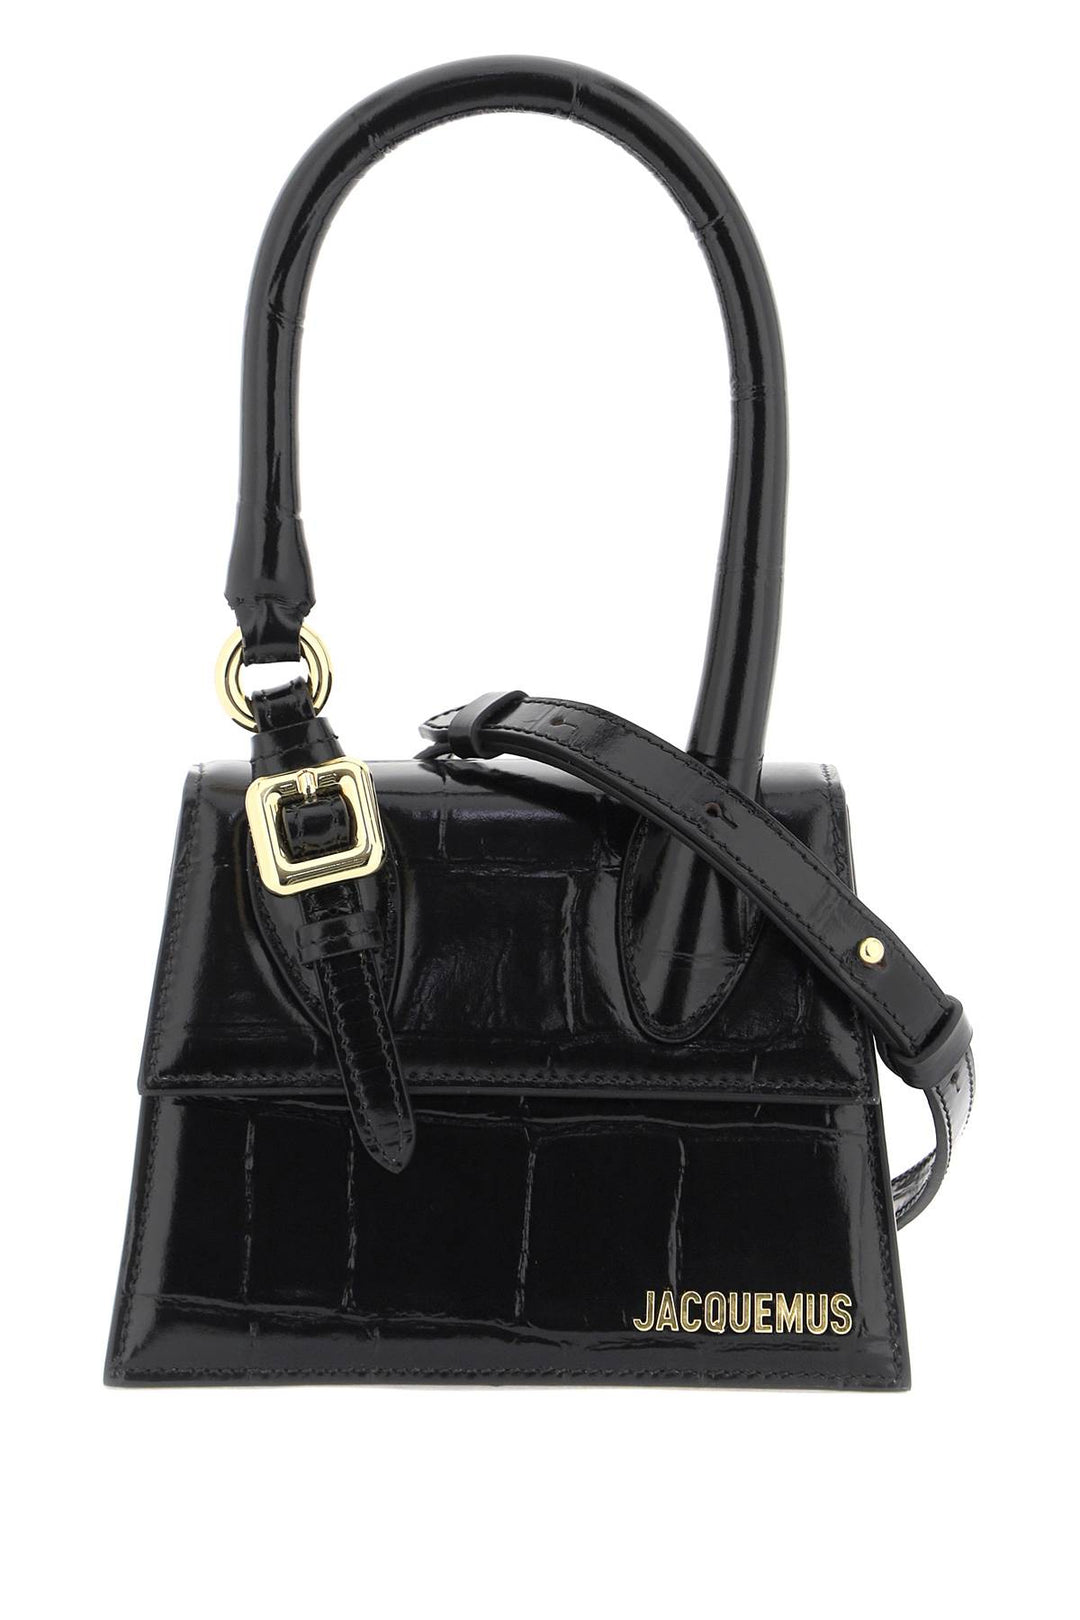 Jacquemus Le Chiquito Moyen Boucle Bag   Nero